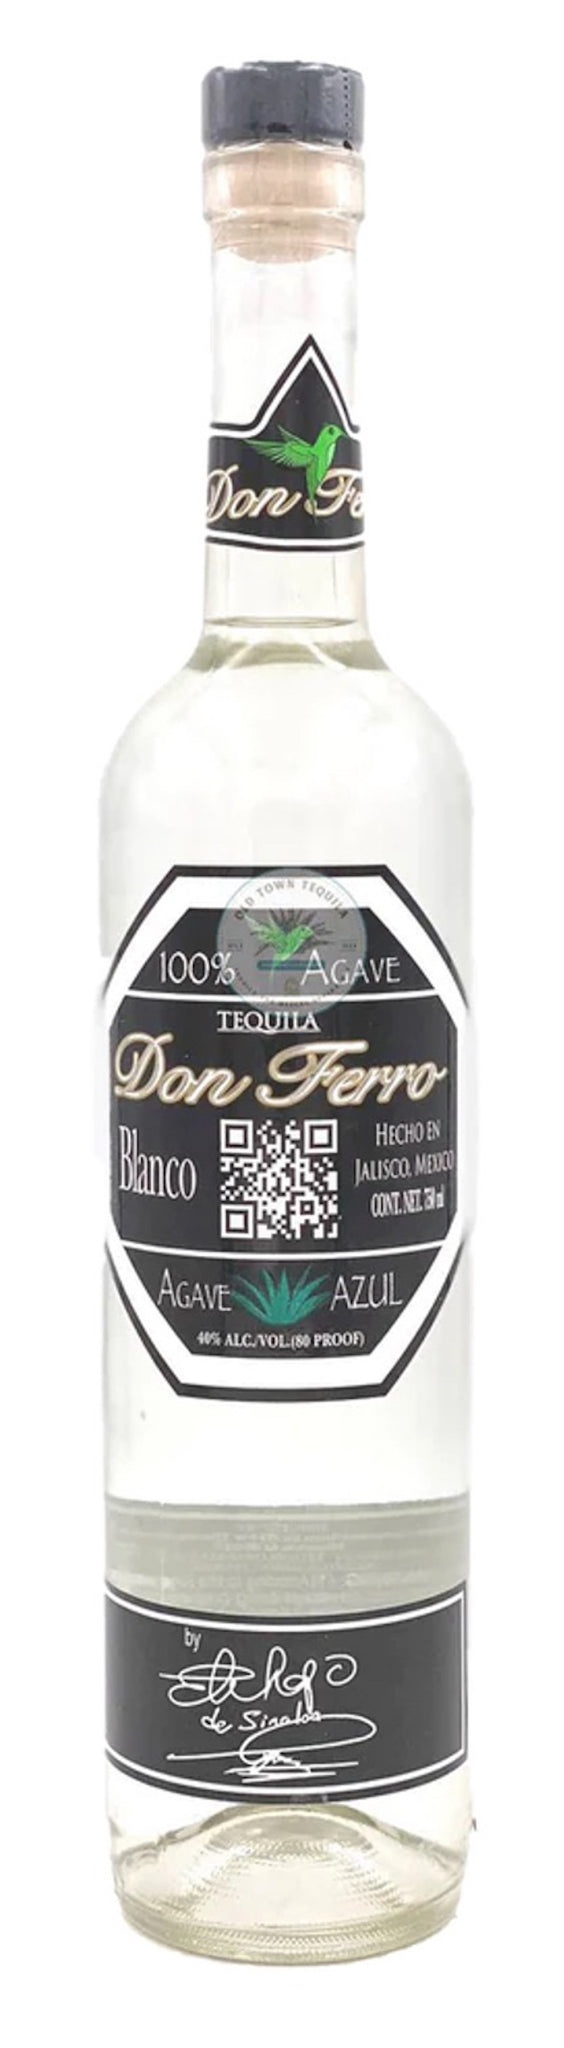 Tequila Don Ferro Blanco